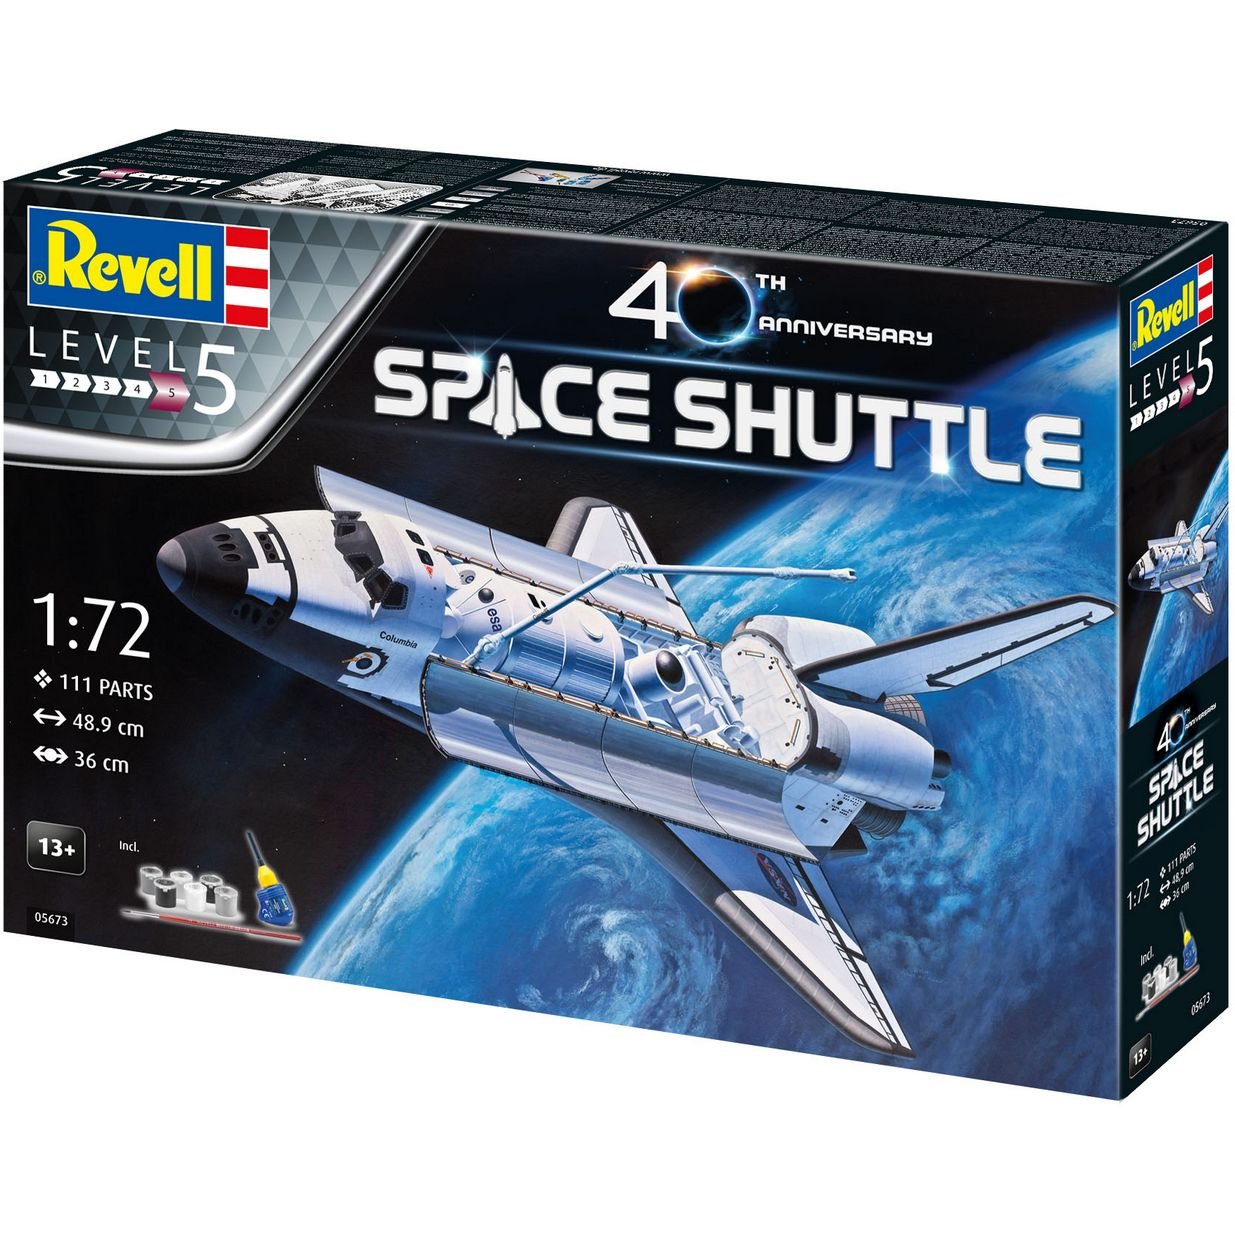 Сборная модель Revell Набор Space Shuttle, уровень 5, масштаб 1:72, 111 деталей (RVL-05673) - фото 1